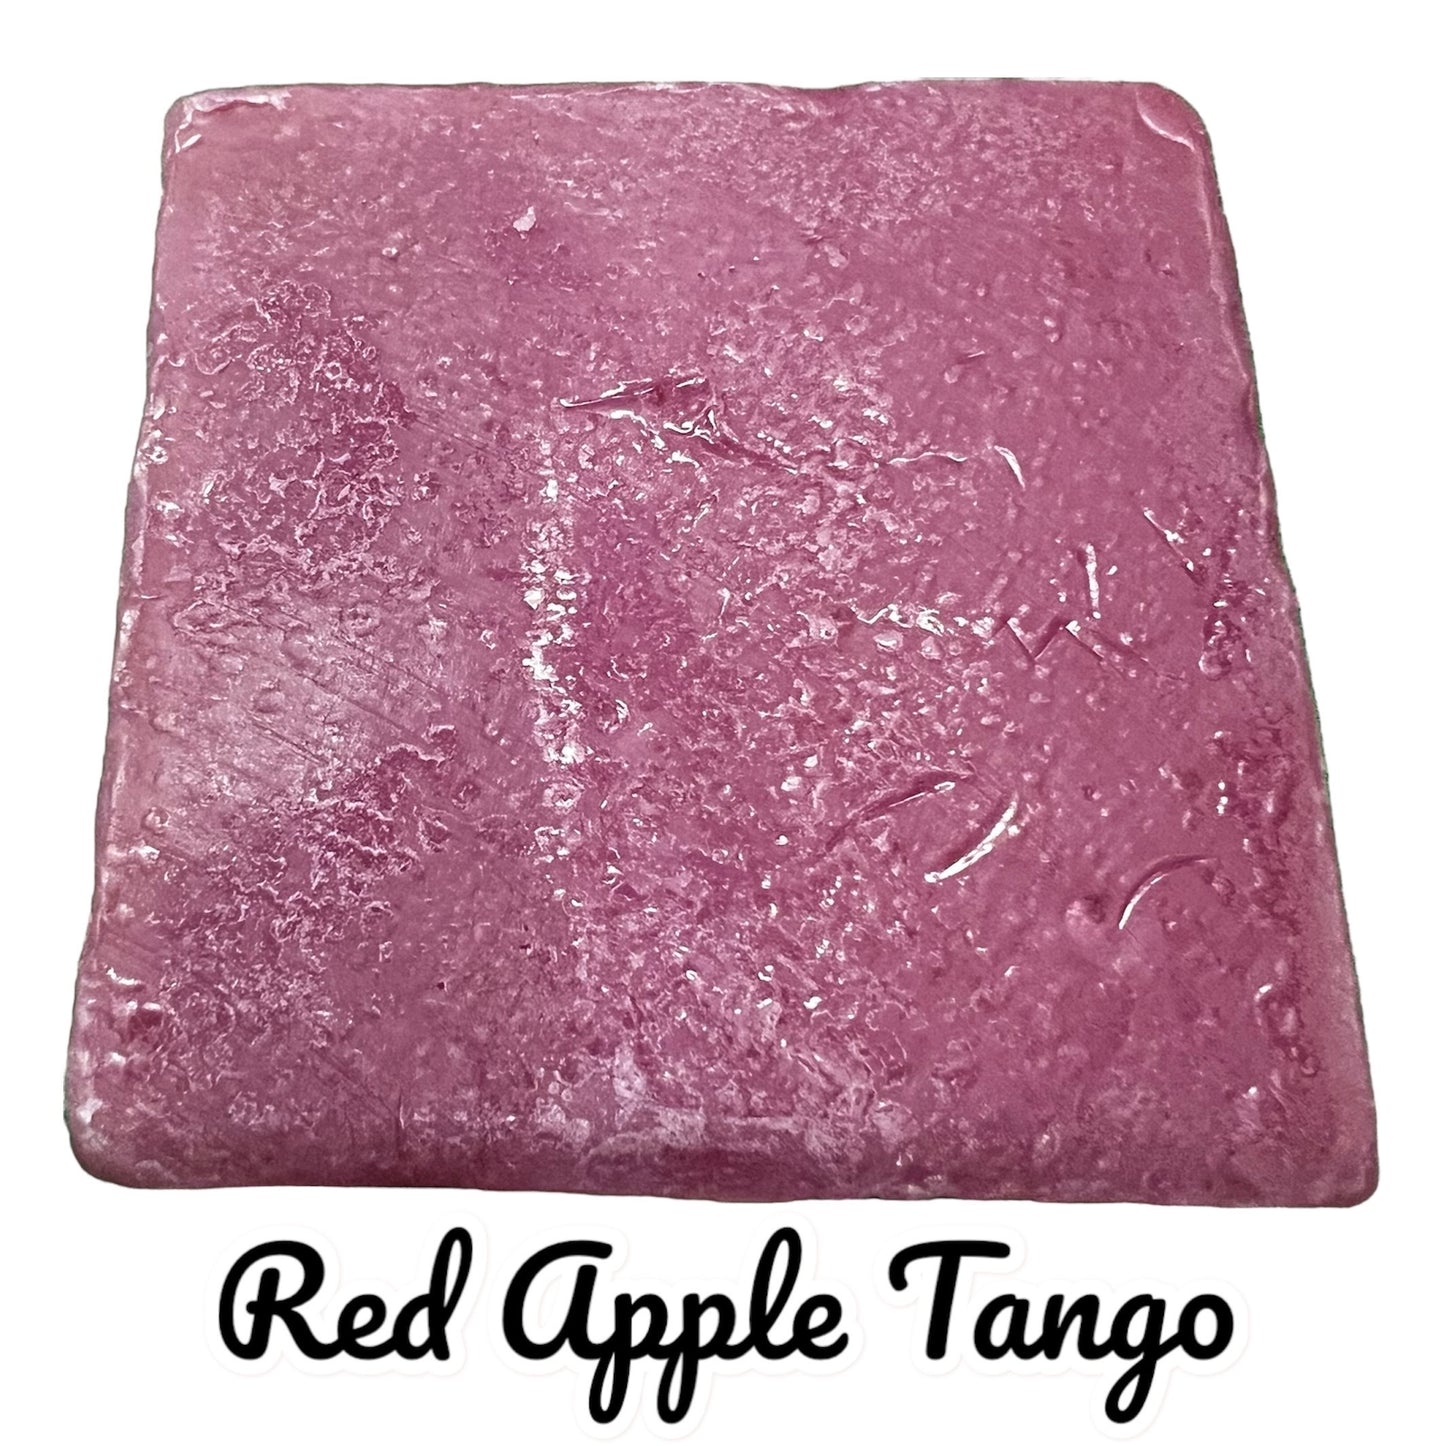 Red Apple Tango